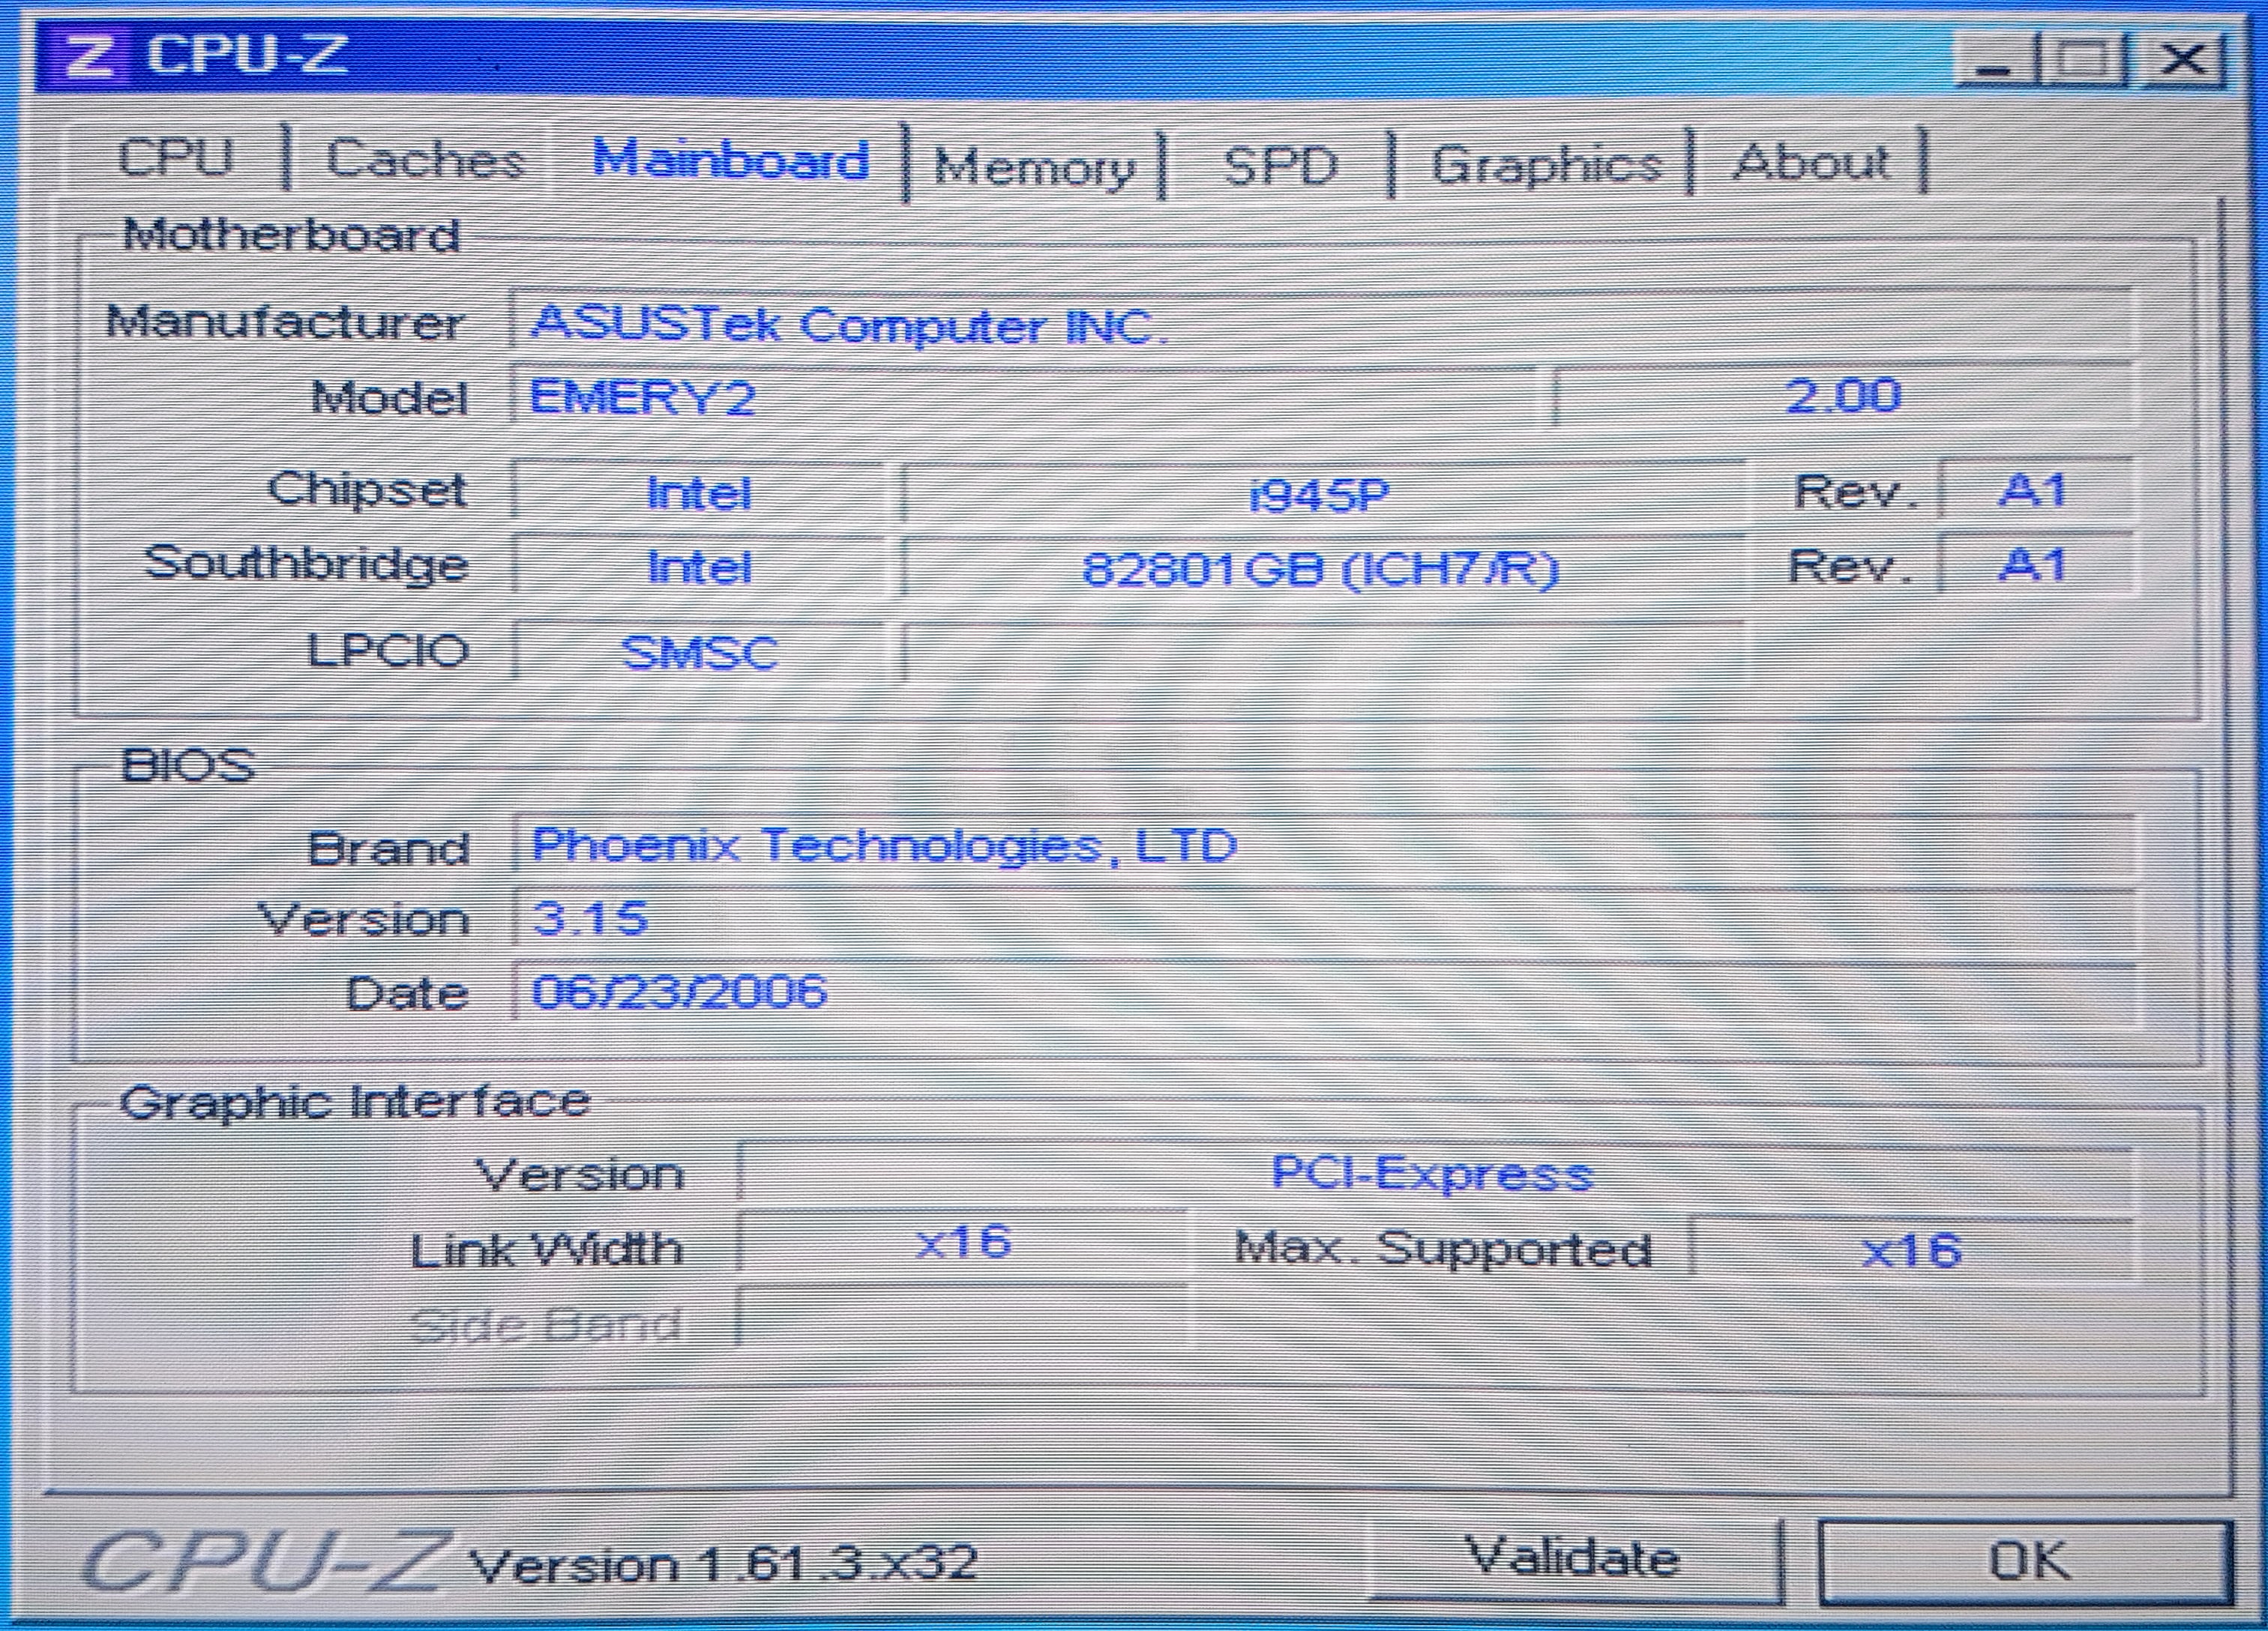 Upgrade M7525 Media Center PC to Core 2 Duo E6700 - HP Support Community -  7974052